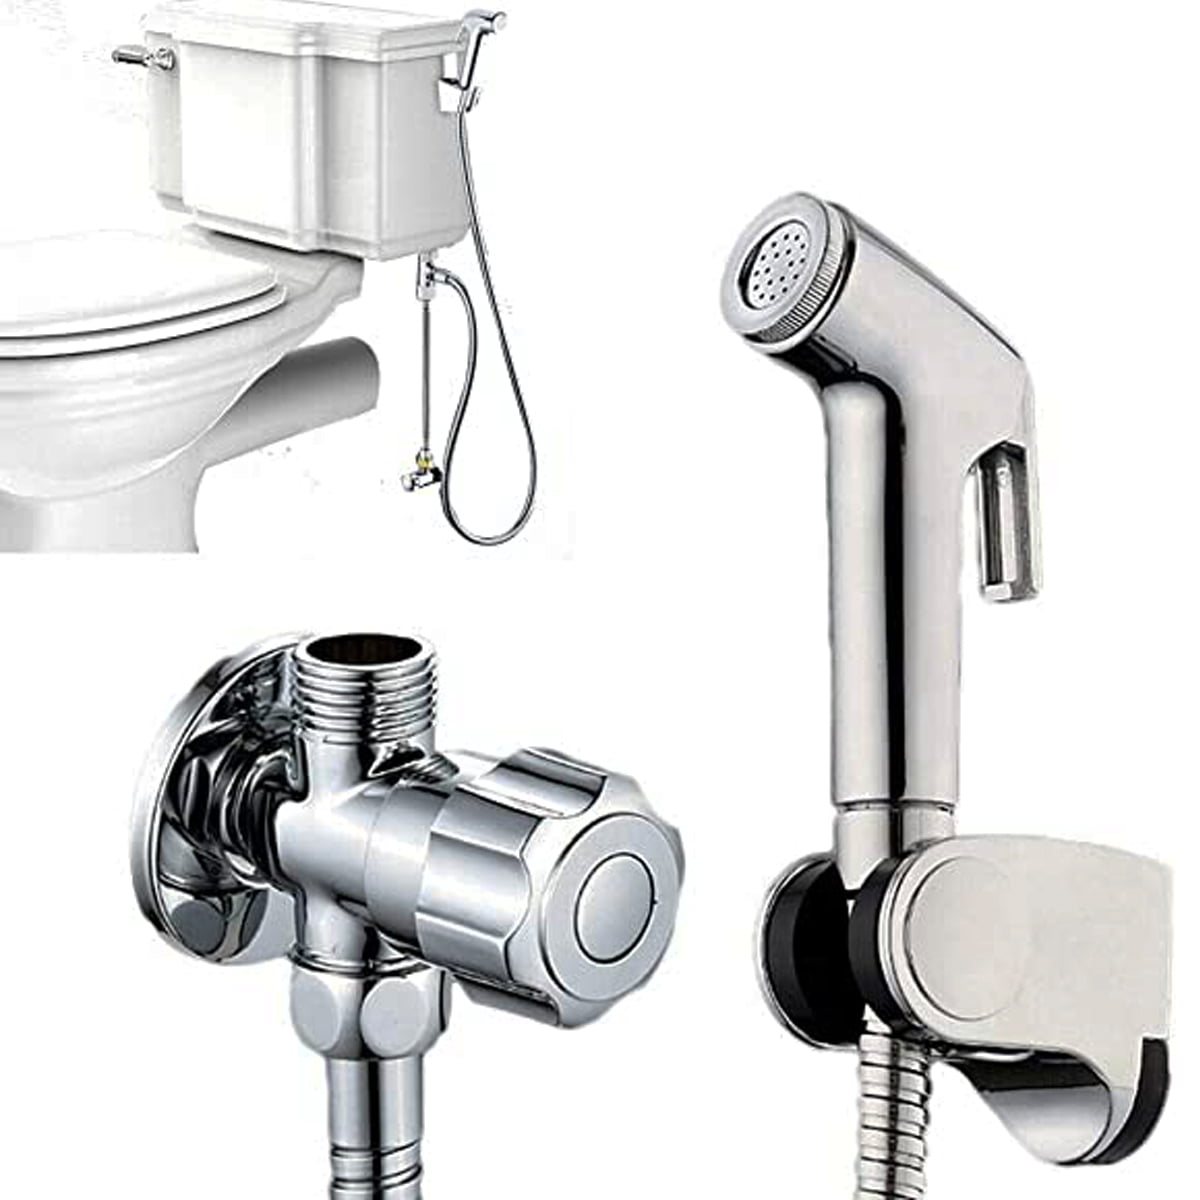 Details about   Stainless Steel Handheld Bidet Spray Shower Head Toilet Shattaf Hose Bathroom 